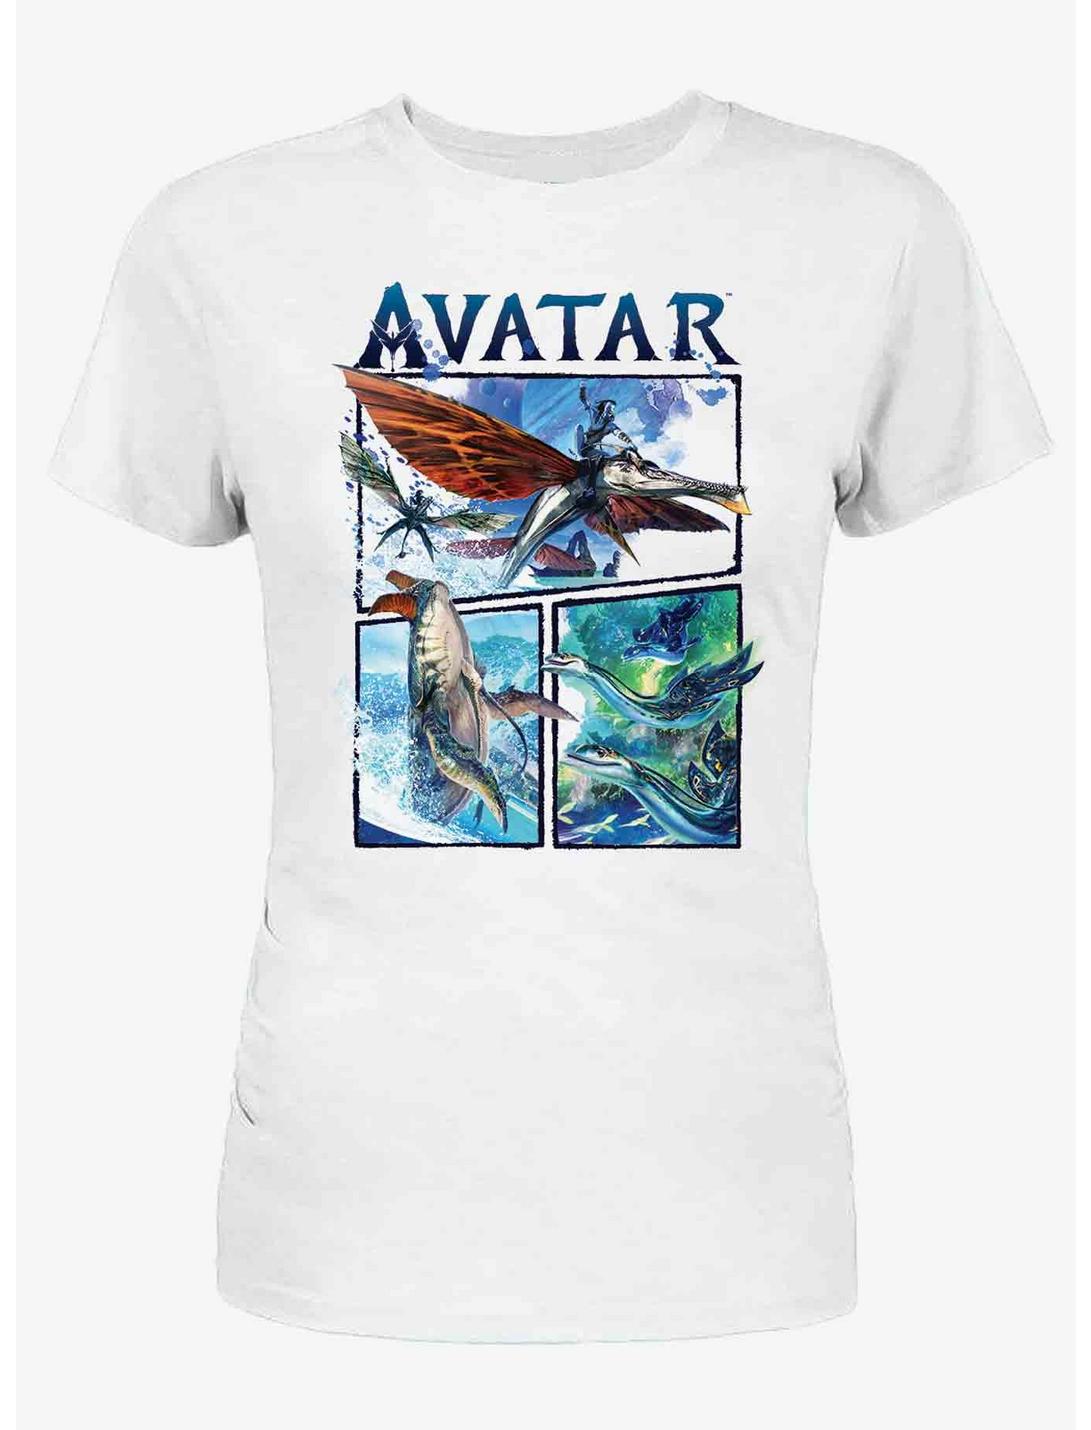 Avatar Animals Grid Girls T-Shirt, MULTI, hi-res